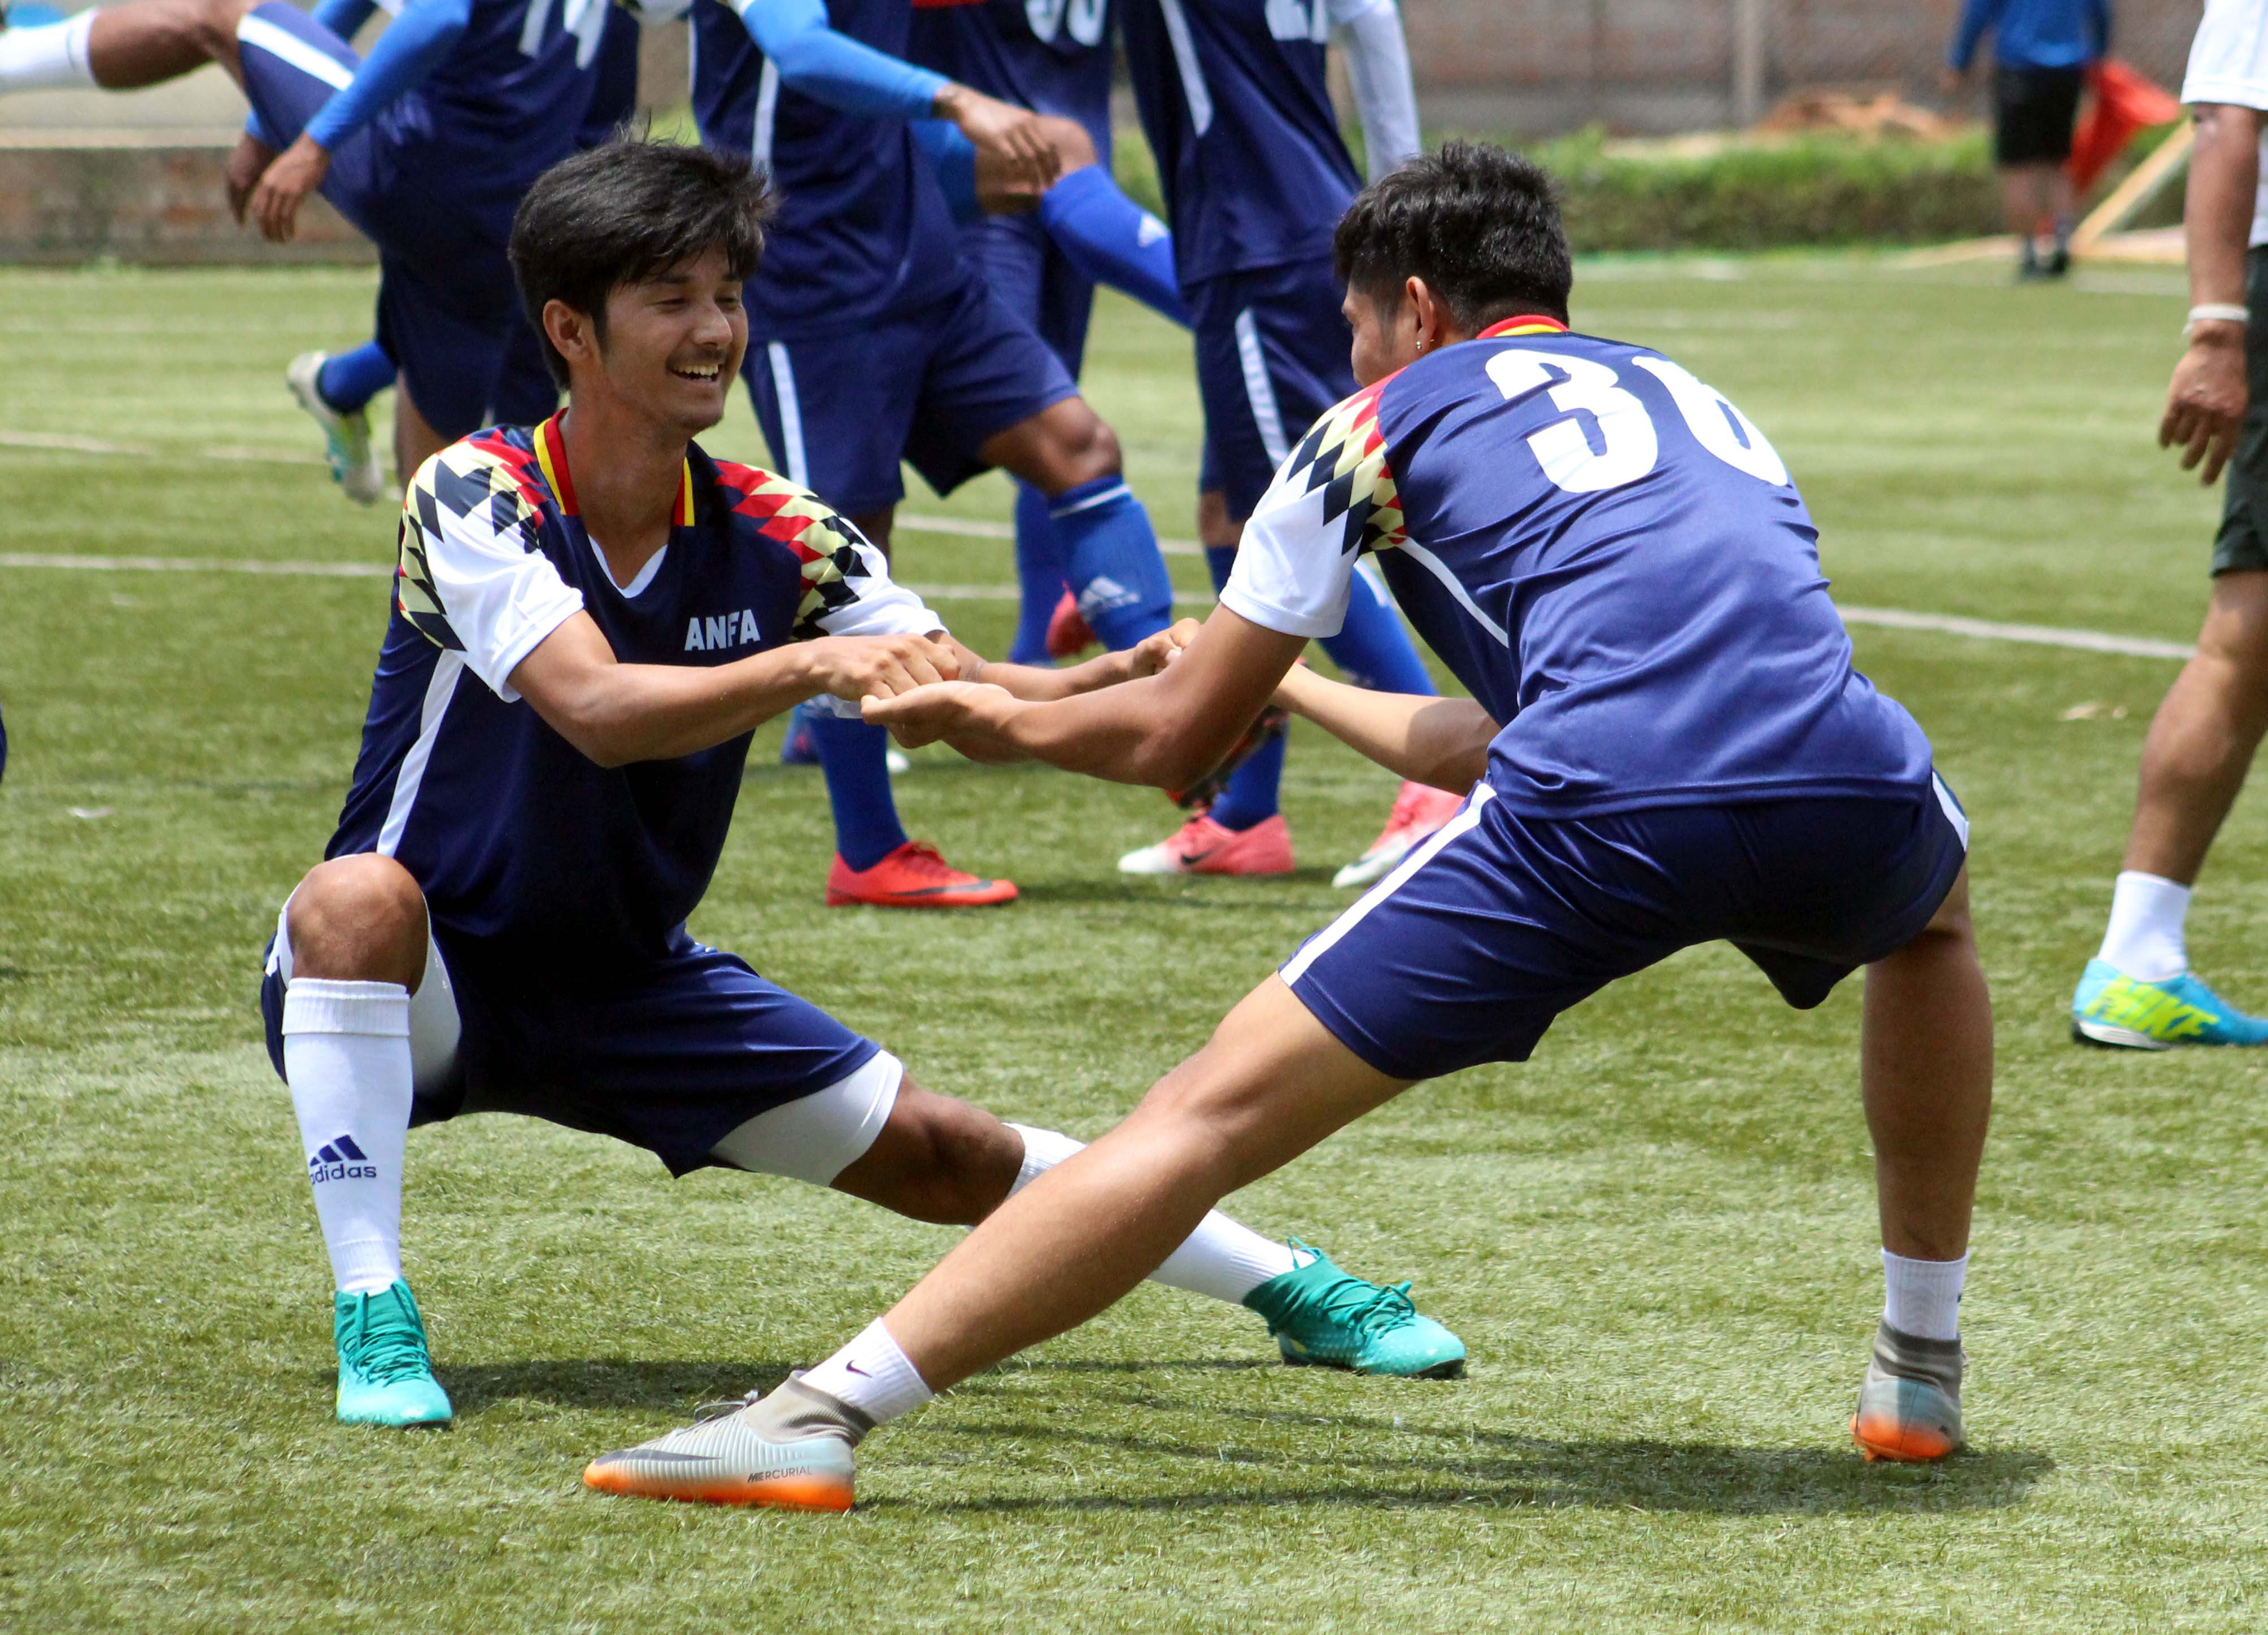 नेपाली राष्ट्रिय फुटबल टिमले थाईल्याण्डसंग मैत्रीपूर्ण  खेल खेल्ने